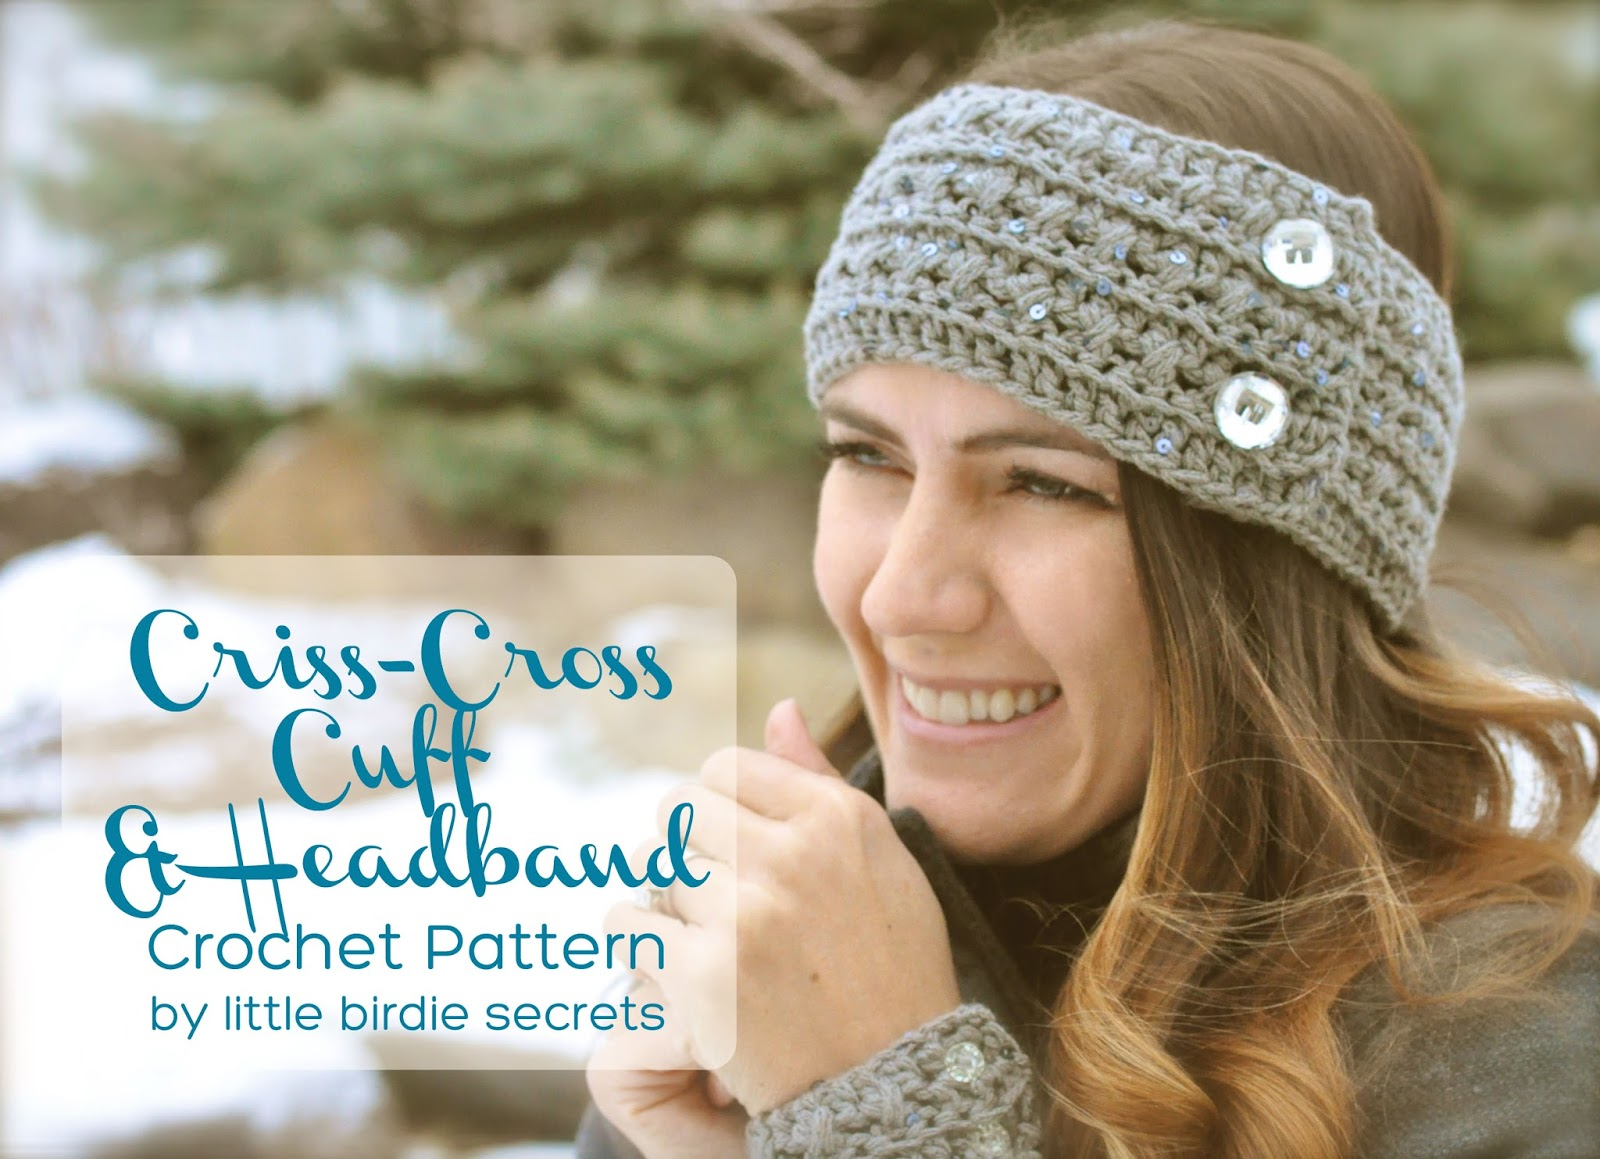 Crochet Headband With Flower Pattern Free Crochet Headband And Cuff Pattern Little Birdie Secrets